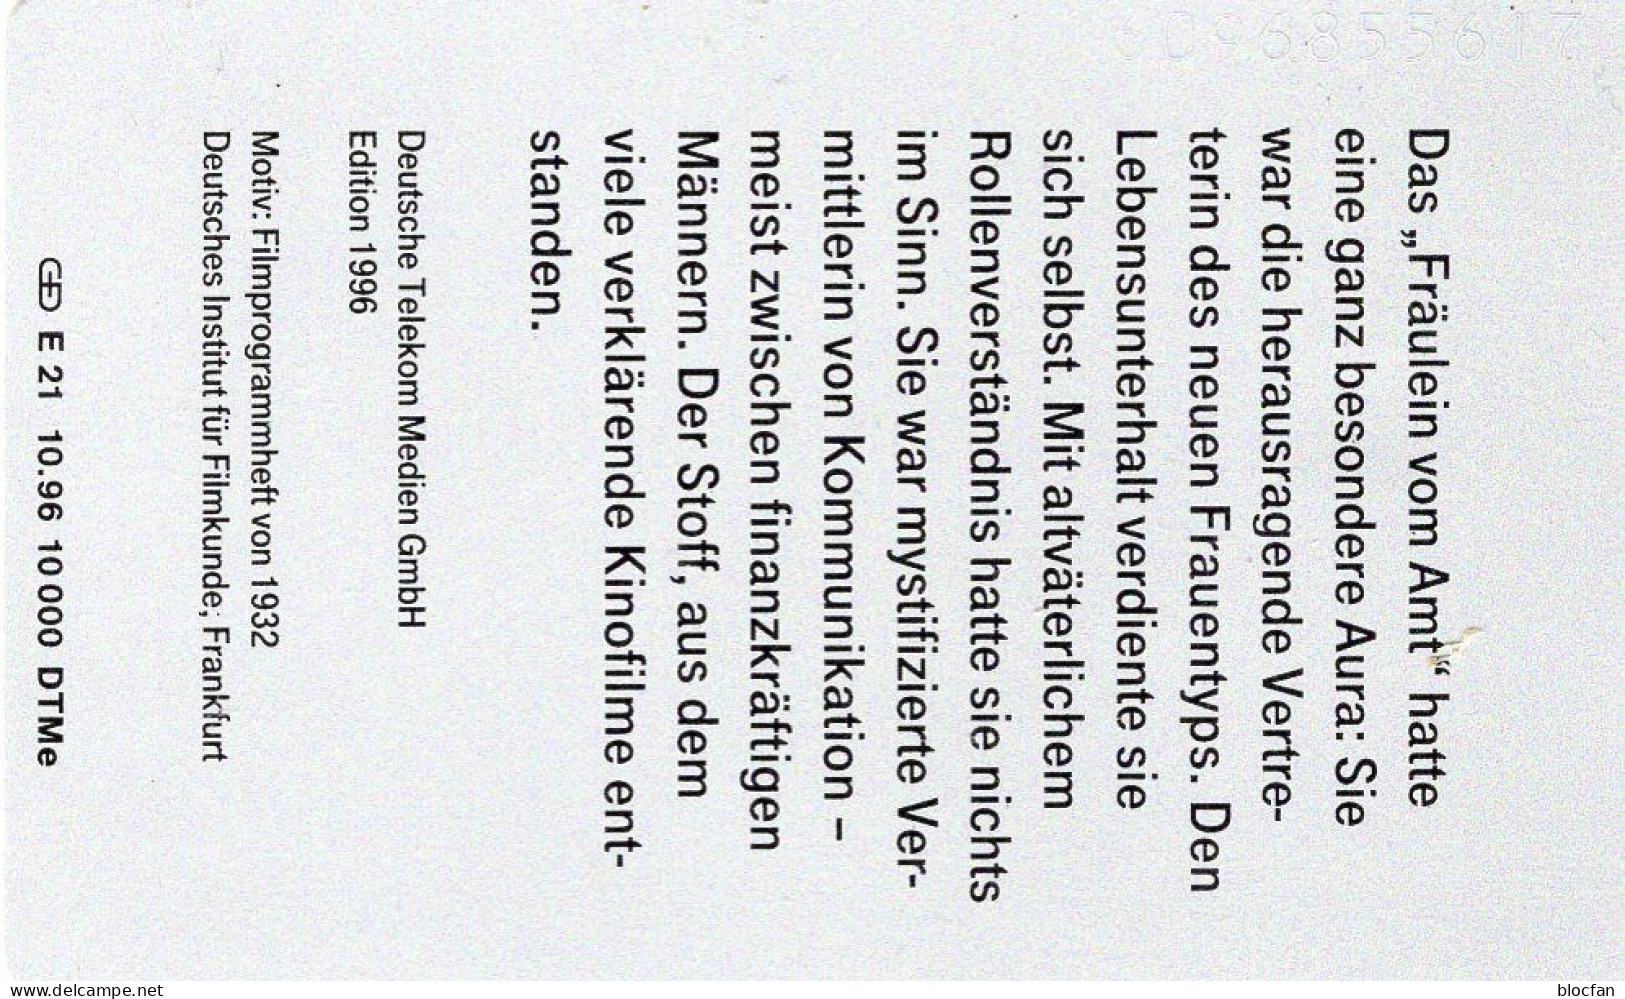 Telegrafen-Amt TK E21/1996 10.000 Expl.** 30€ Edition 6 Vermittlung In Berlin TC History Communication Phonecard Germany - E-Series : Edition - D. Postreklame